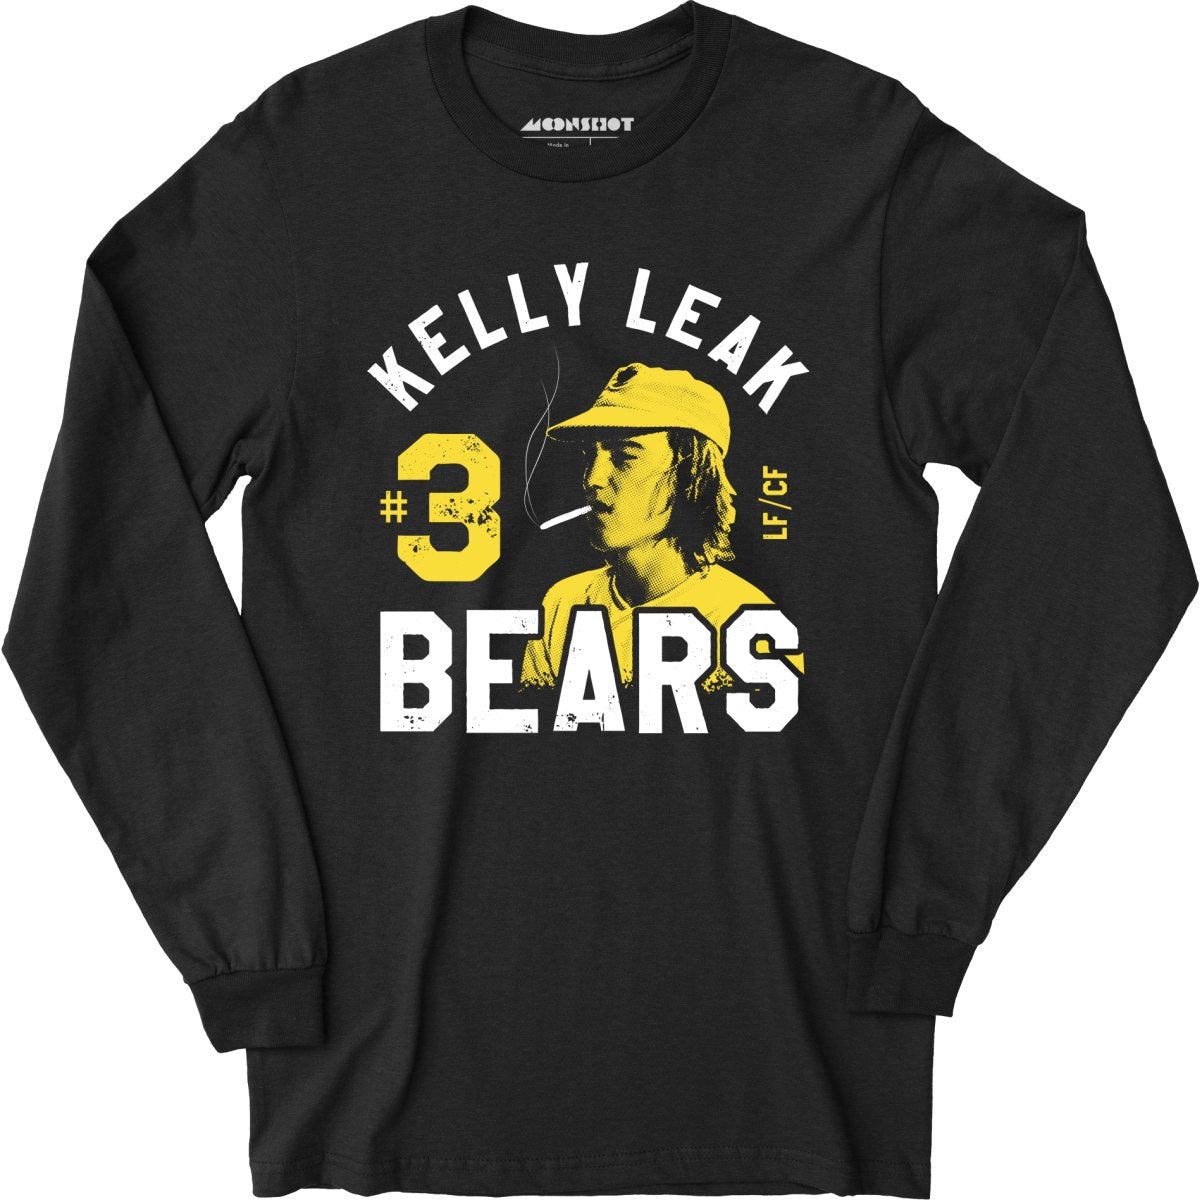 Kelly Leak #3 Bears - Long Sleeve T-Shirt